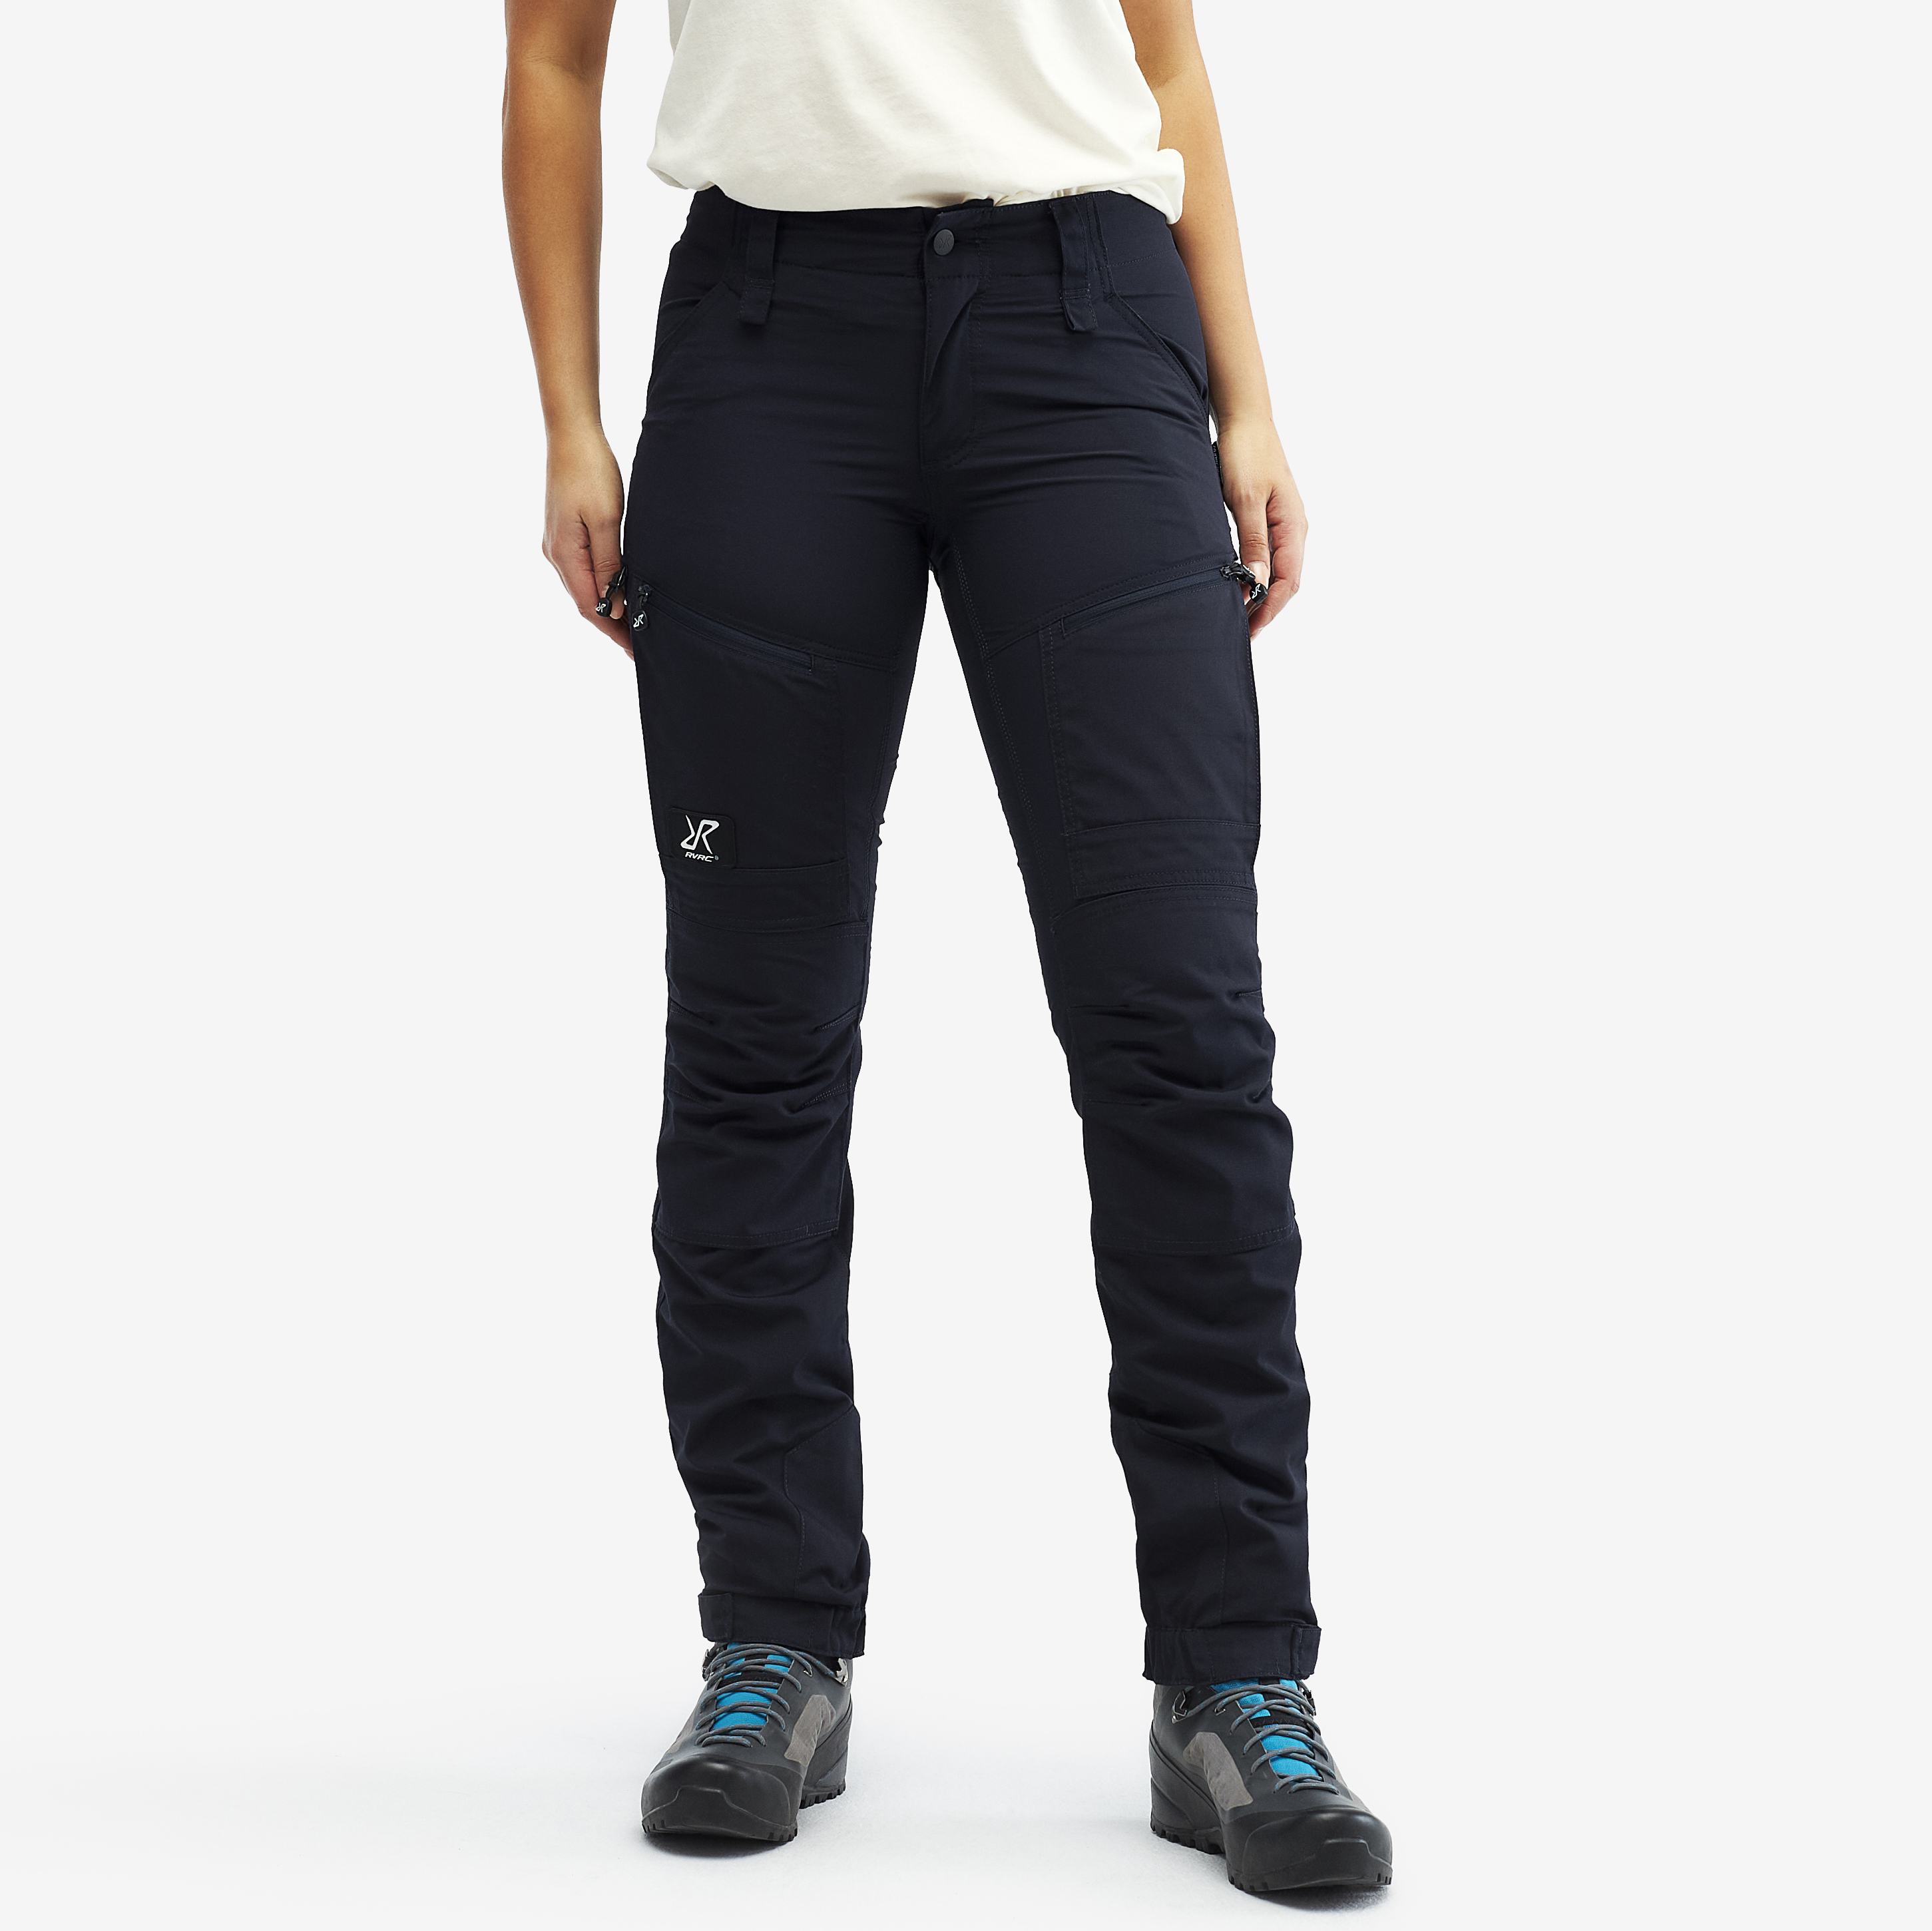 RVRC GP Pro hiking trousers for women in dark blue